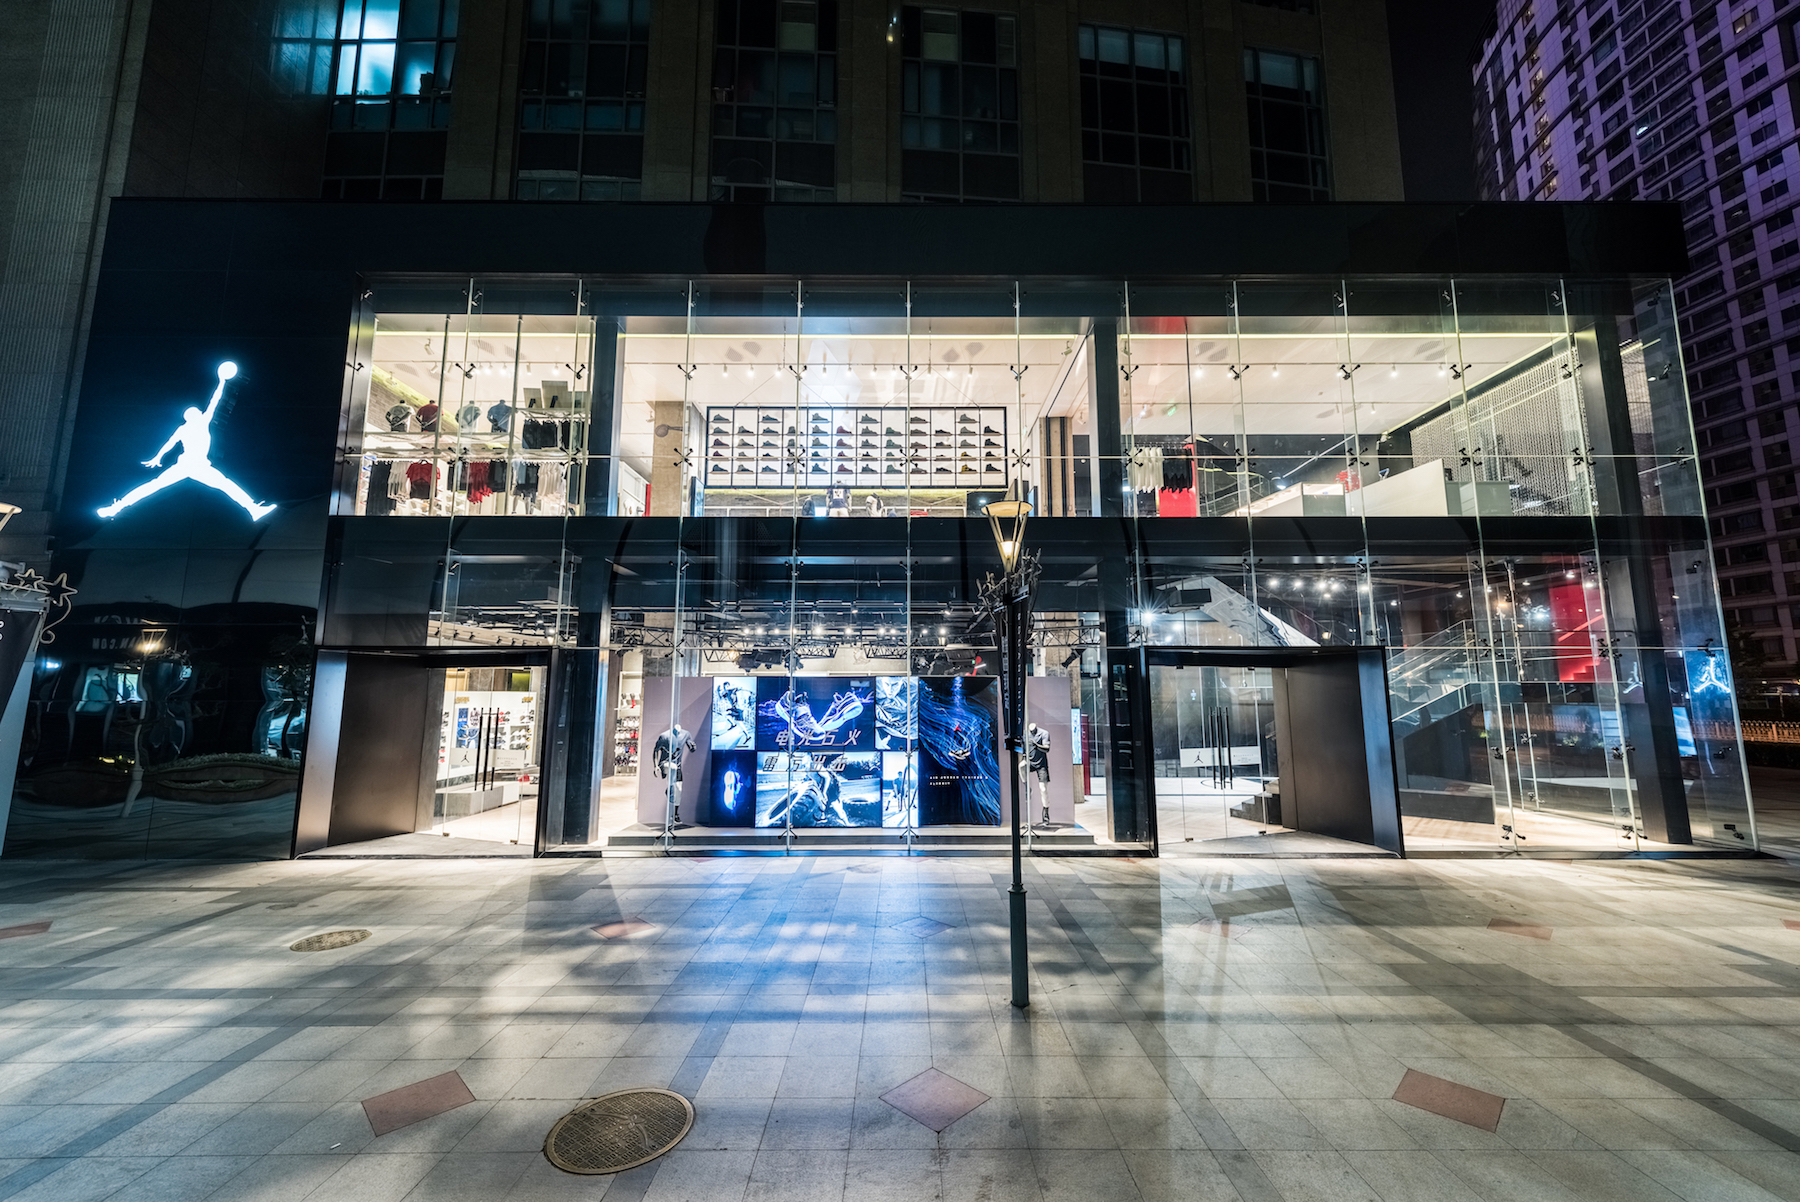 Jordan 9 Guanghua, Asia's Jordan Brand Store, Opens Beijing WearTesters